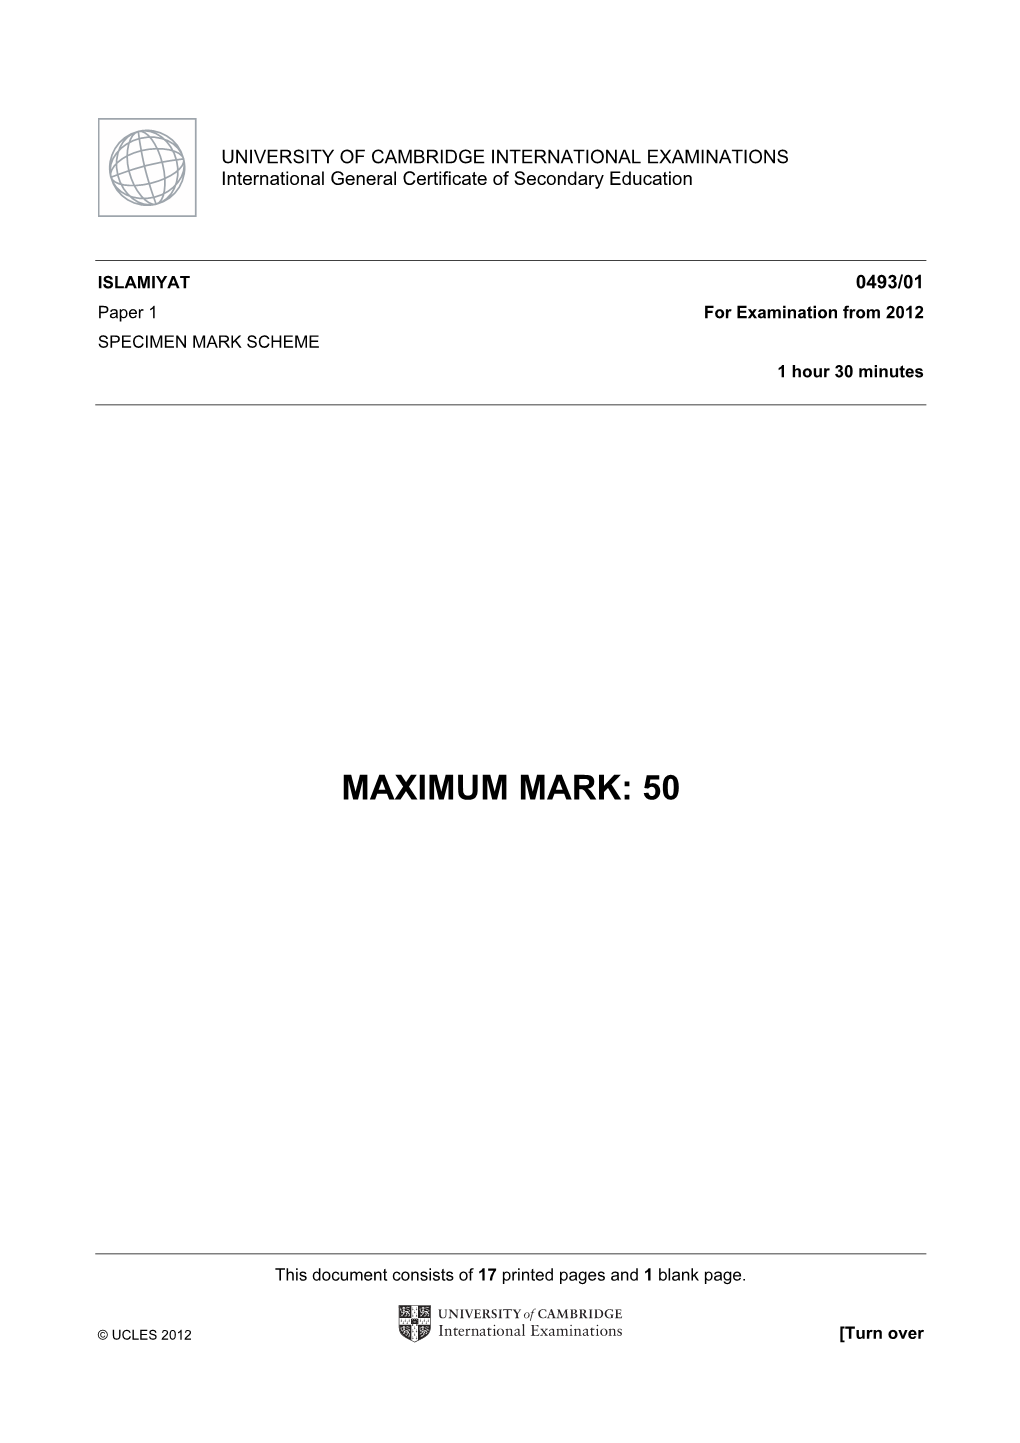 Maximum Mark: 50